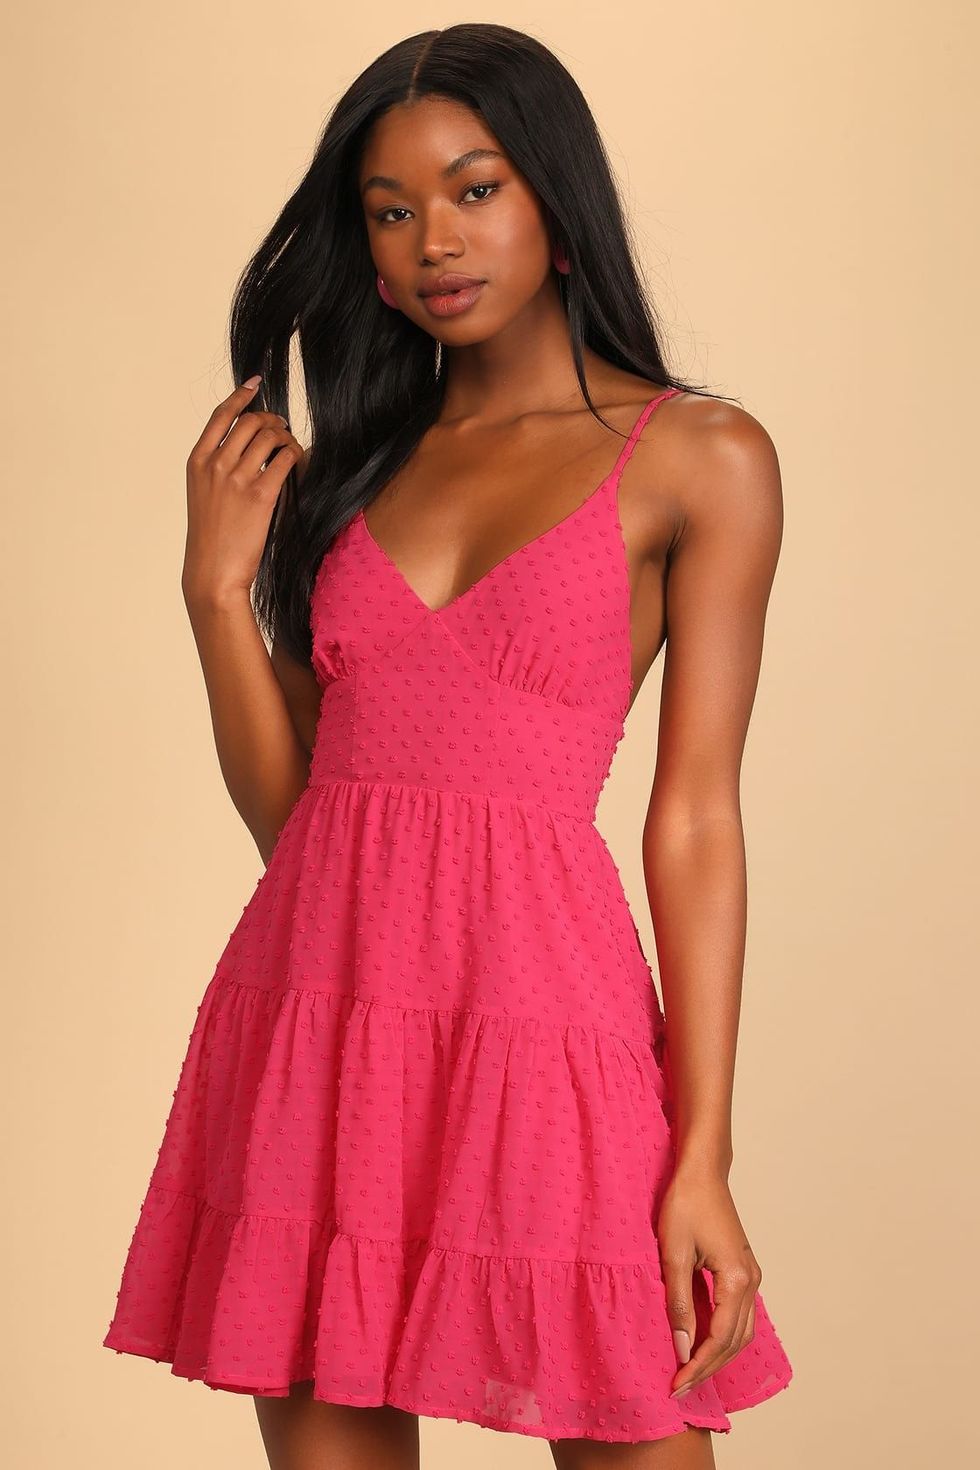 Flair for Fun Hot Pink Swiss Dot Tiered Mini Dress